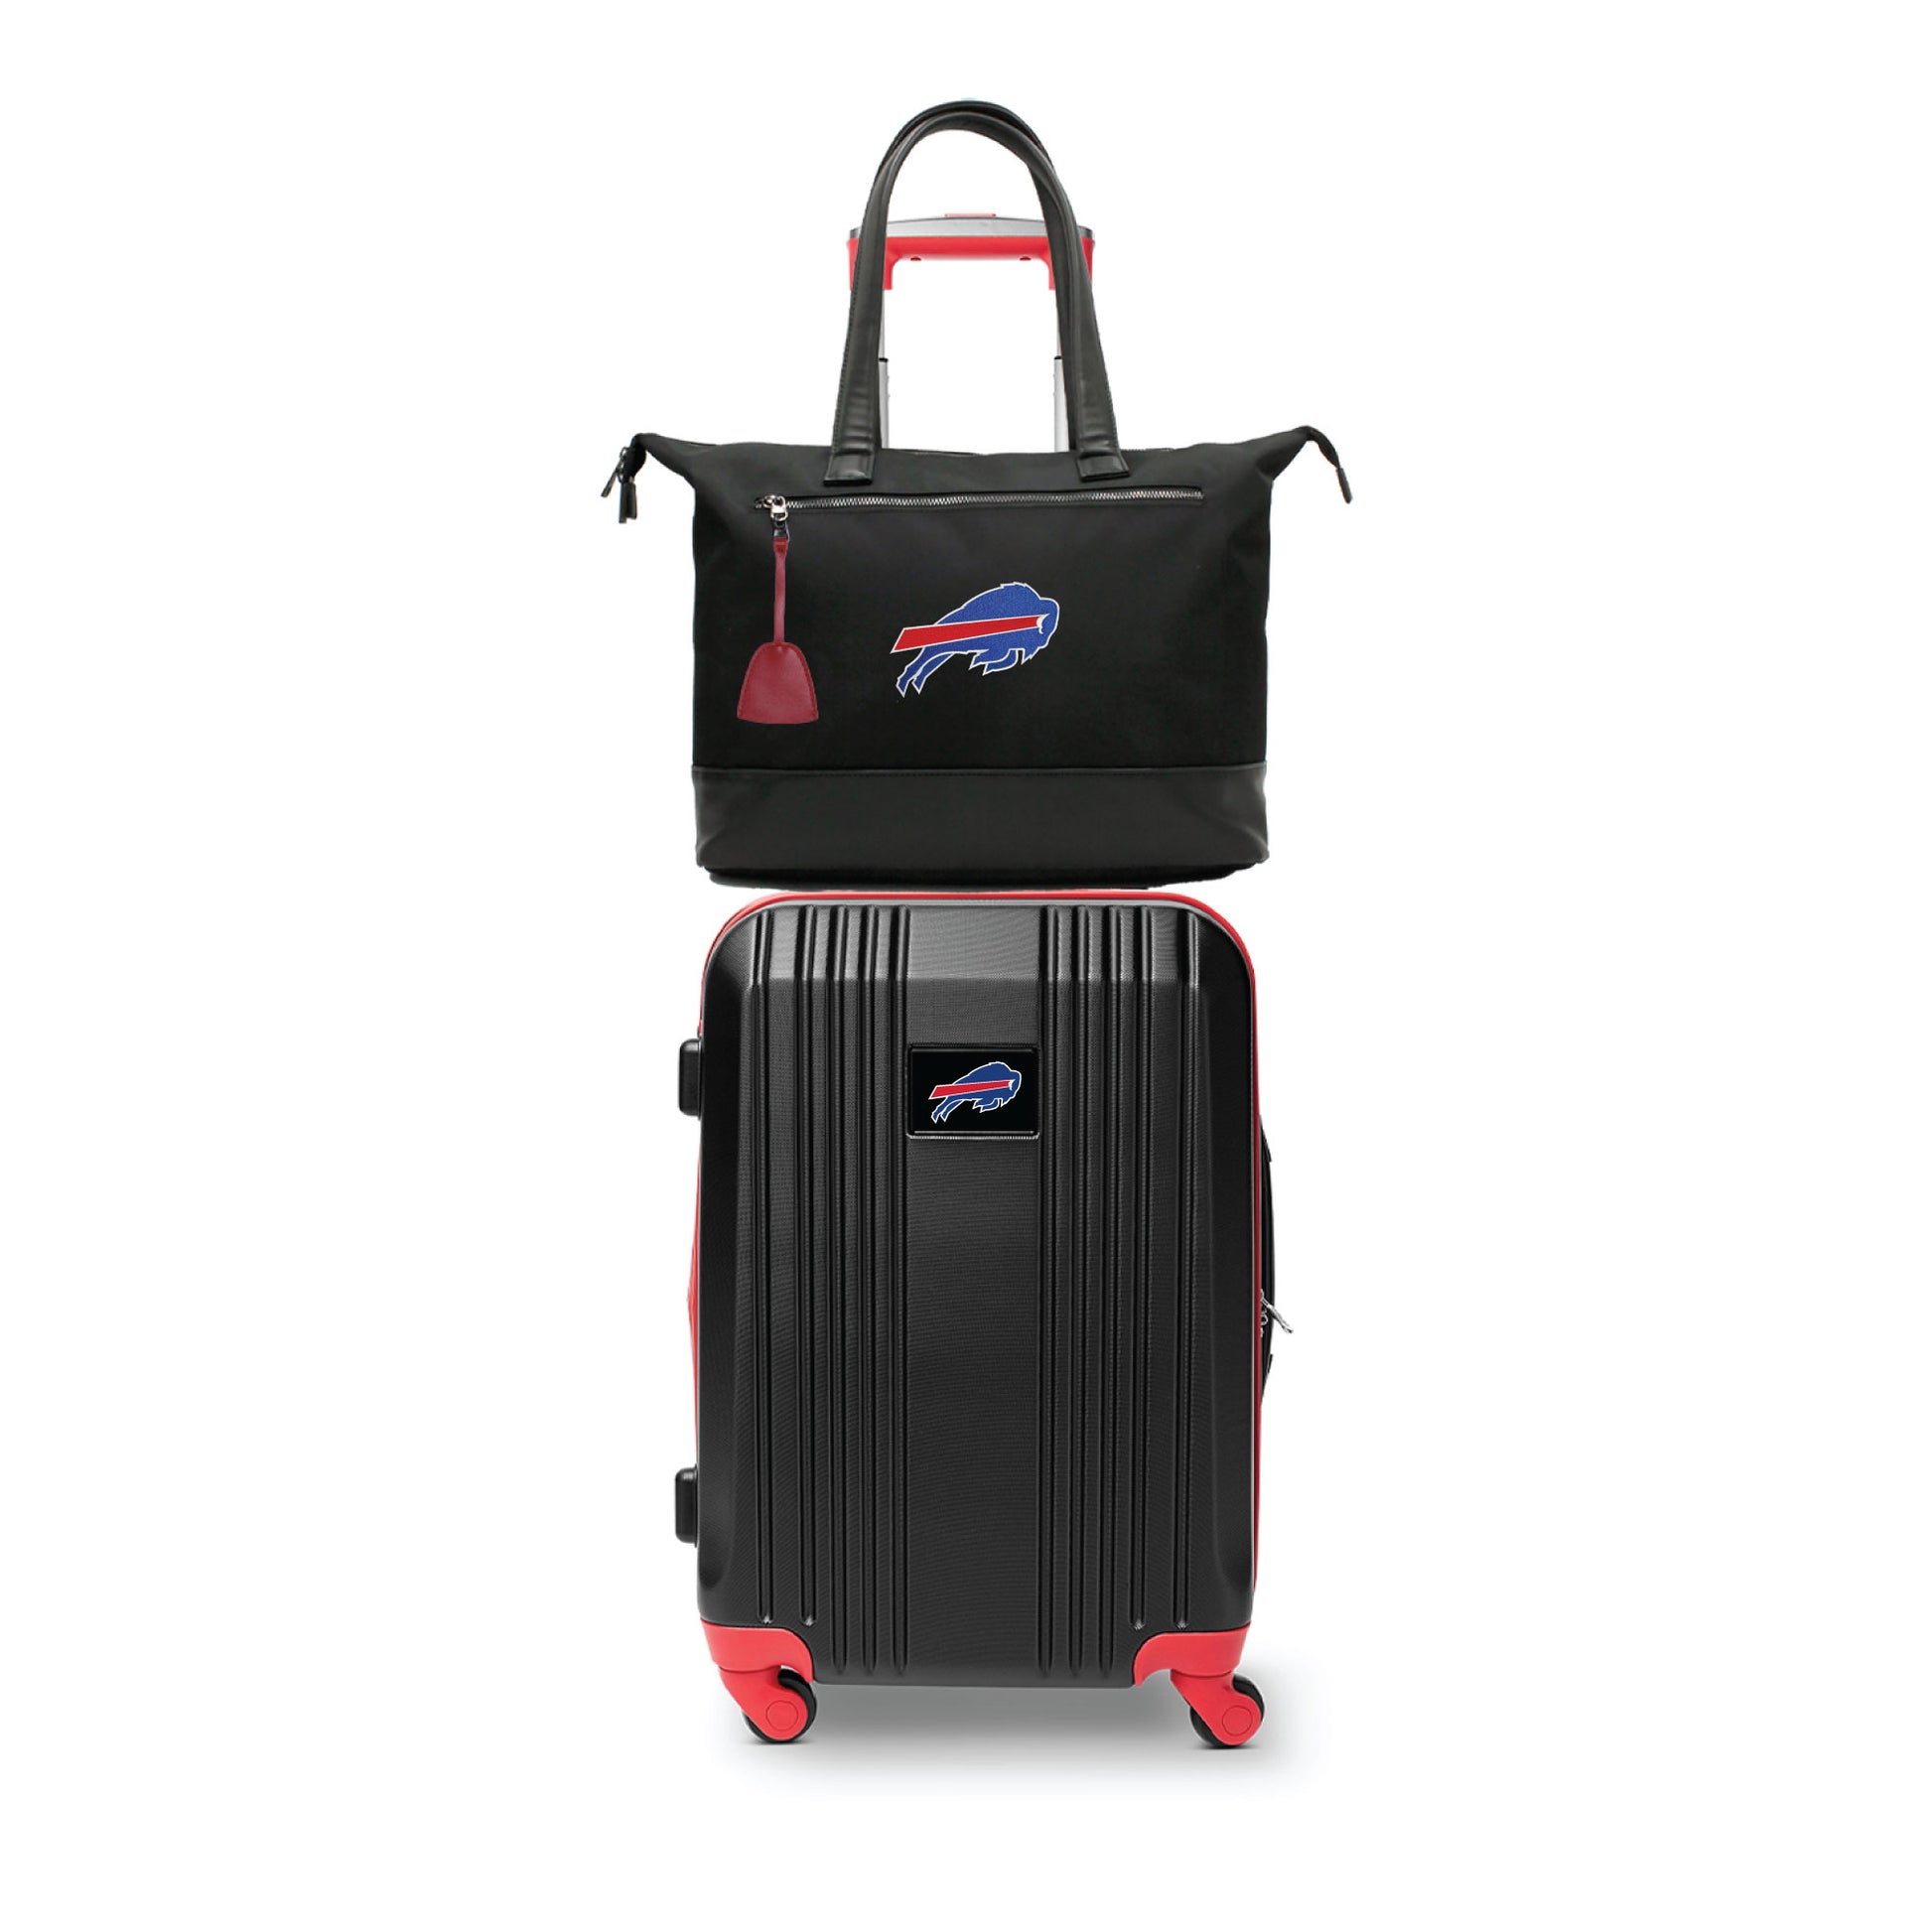 Buffalo Bills Premium Laptop Tote Bag and Luggage Set